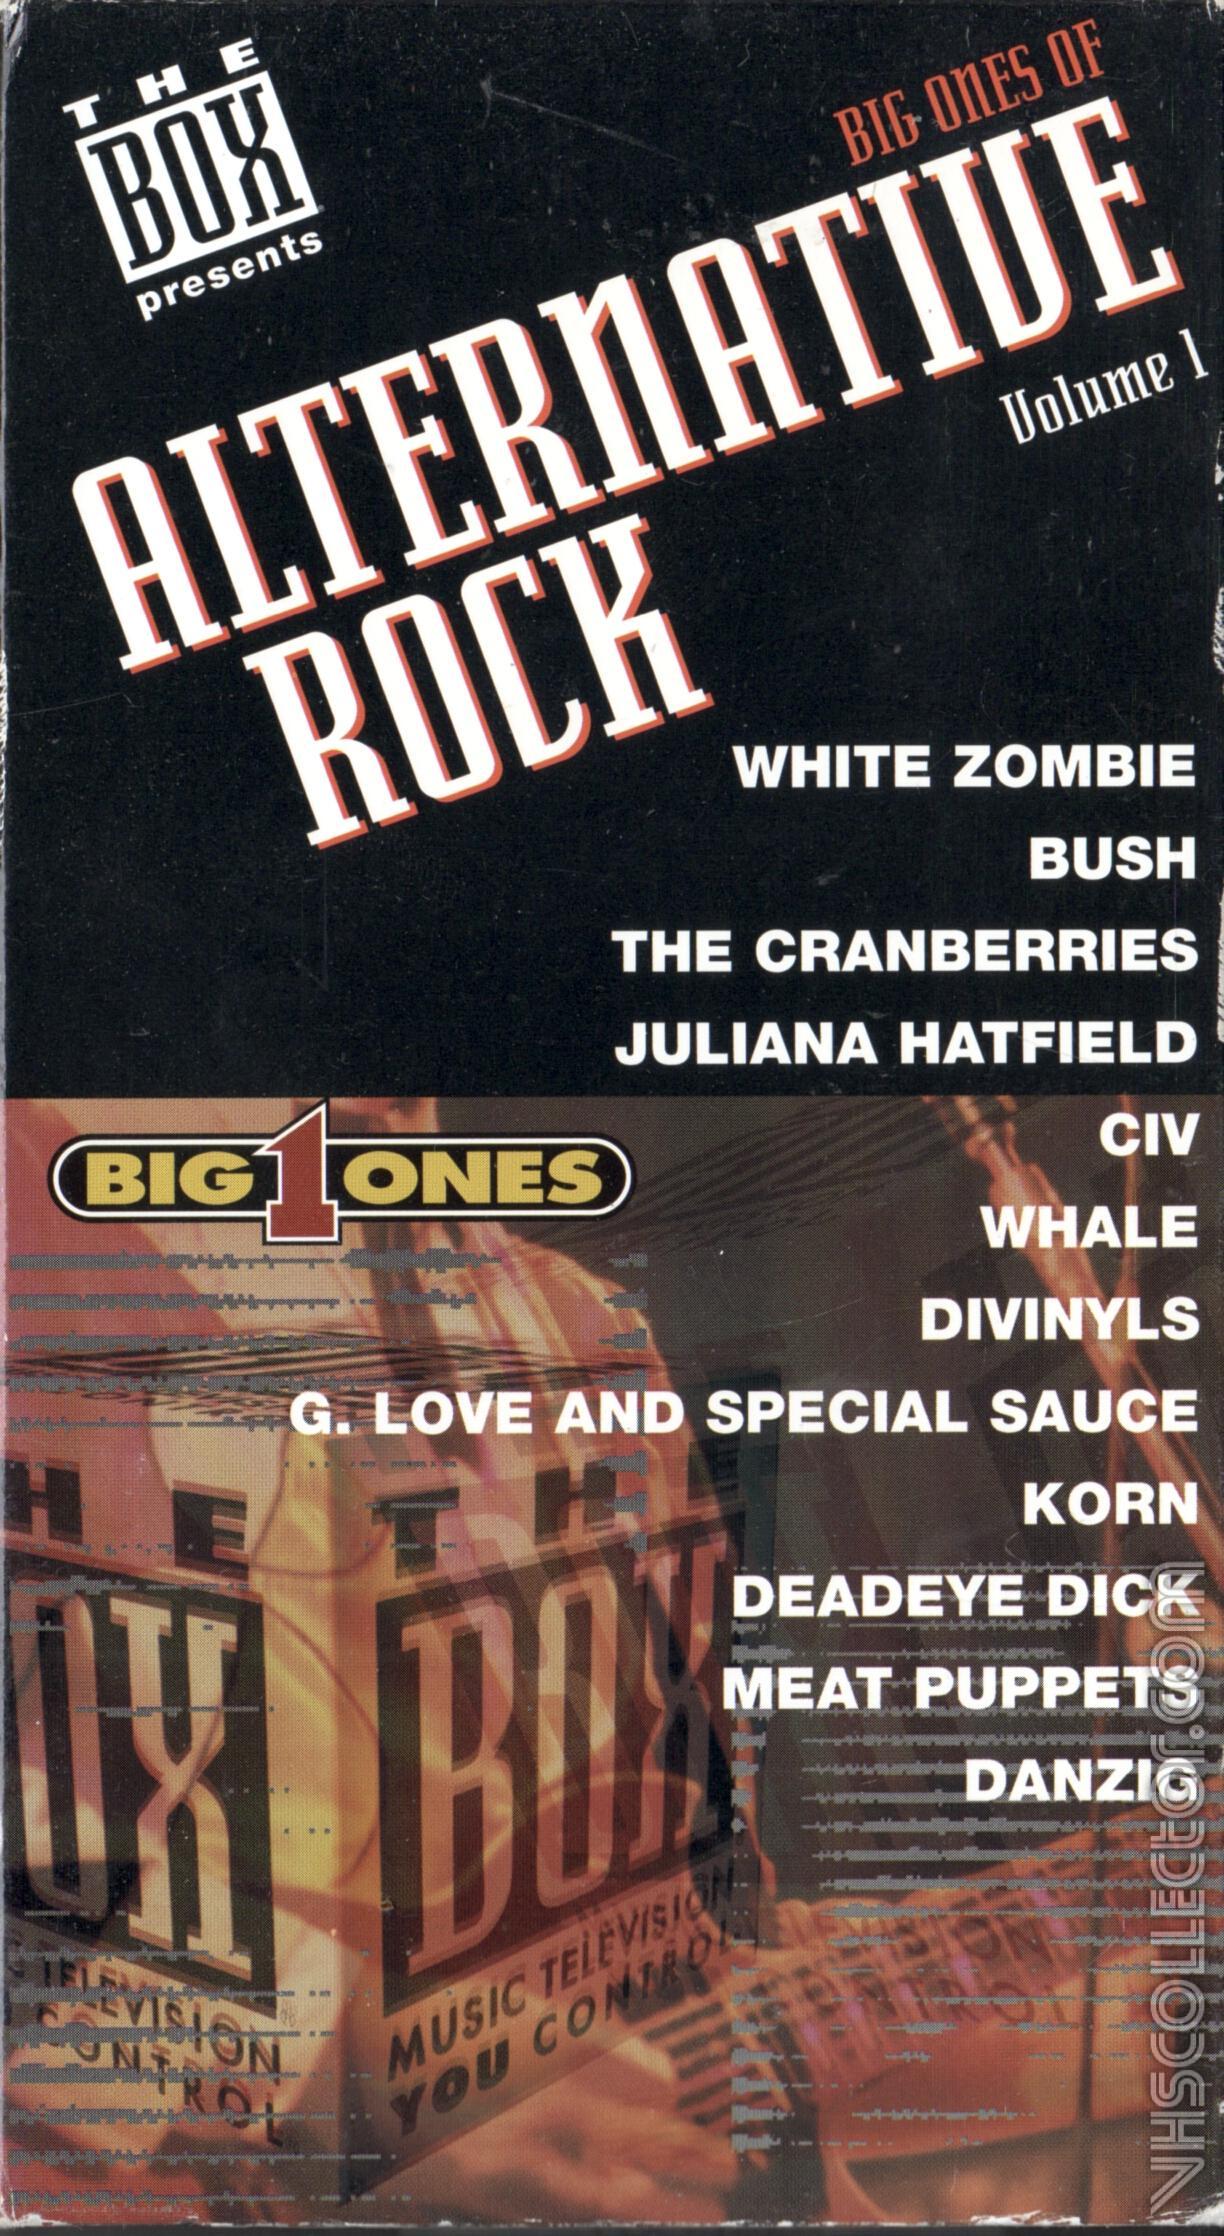 The Big Ones of Alternative Rock, Volume 1 | VHSCollector.com